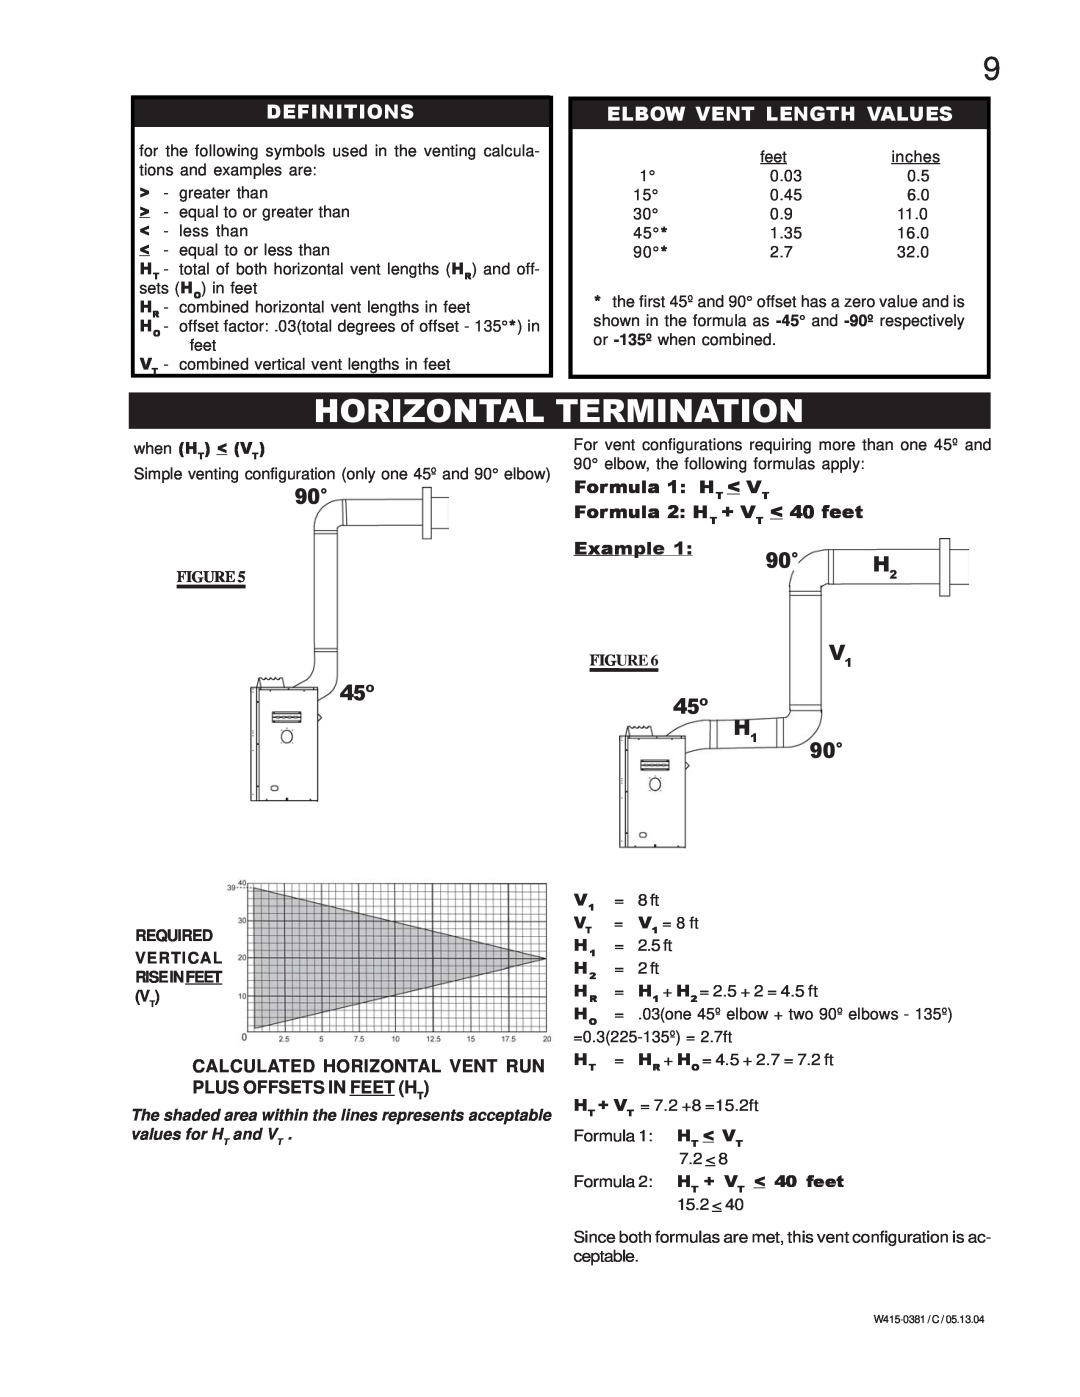 Napoleon Fireplaces BGDV42P, BGDV42N manual Horizontal Termination, Definitions, Elbow Vent Length Values 